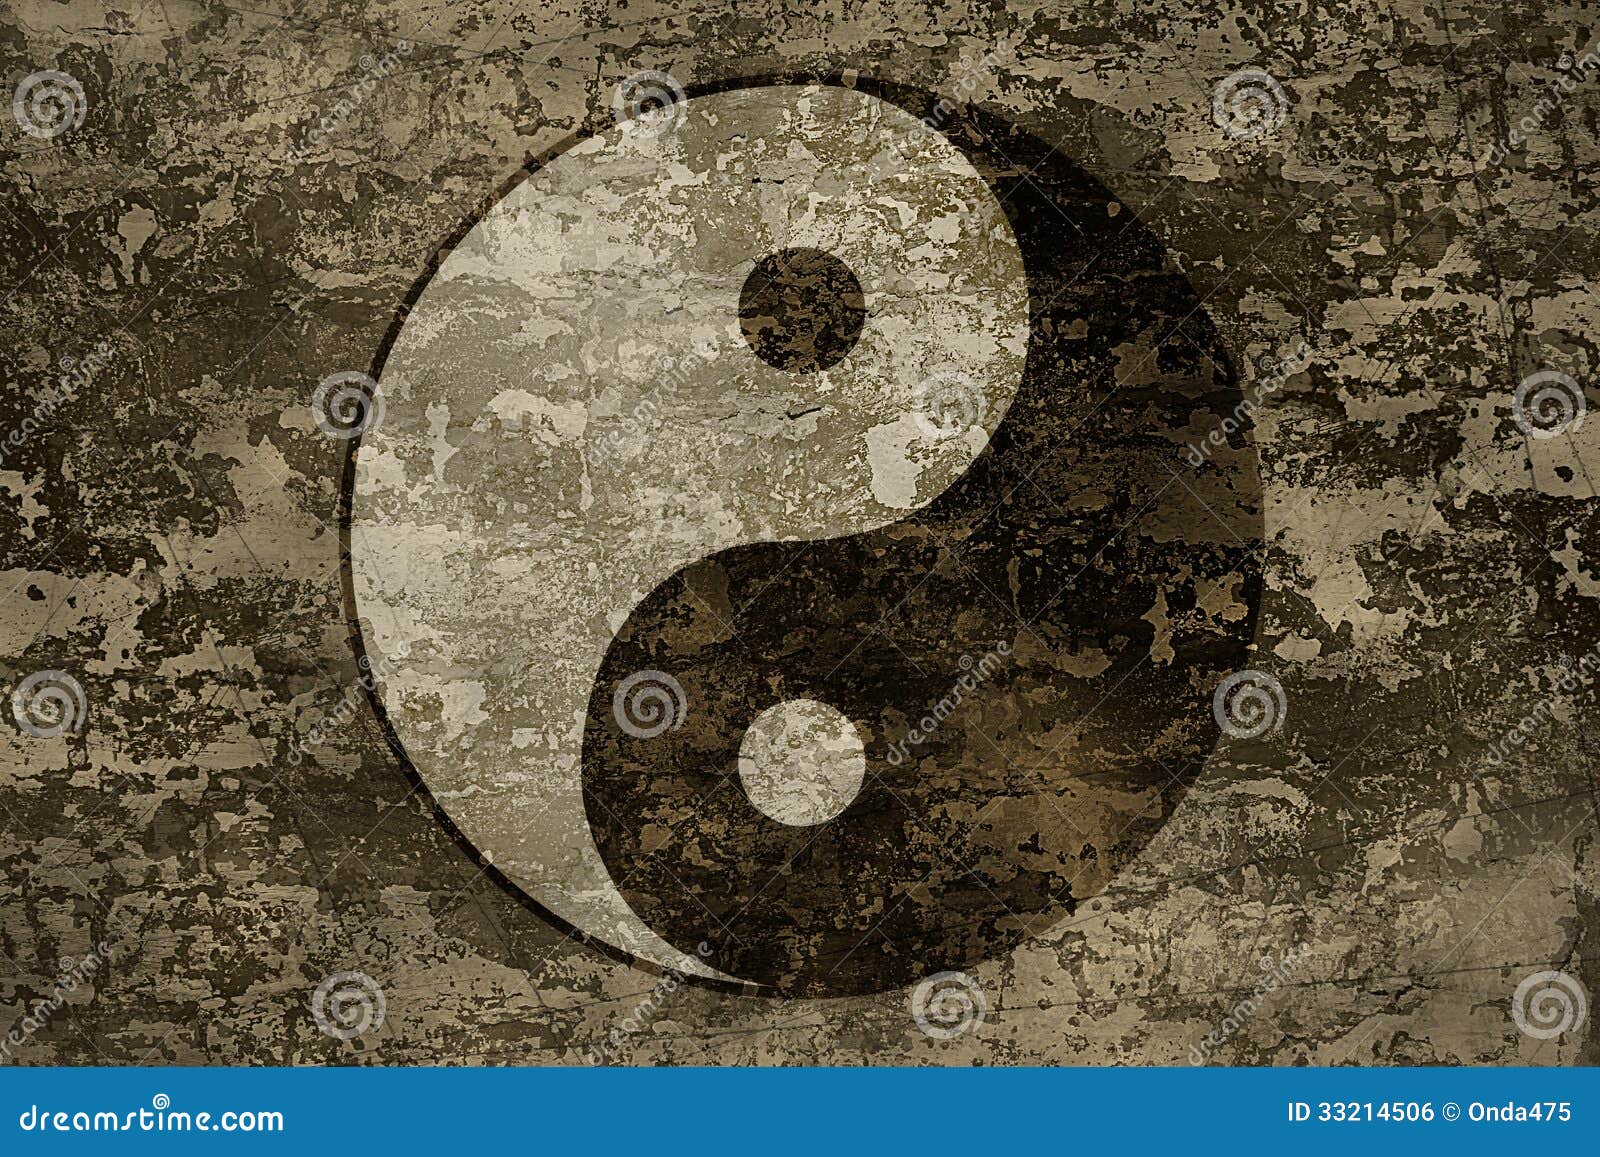 ancient-oriental-symbol-yin-yang-symbols-grange-background-texture-33214506.jpg